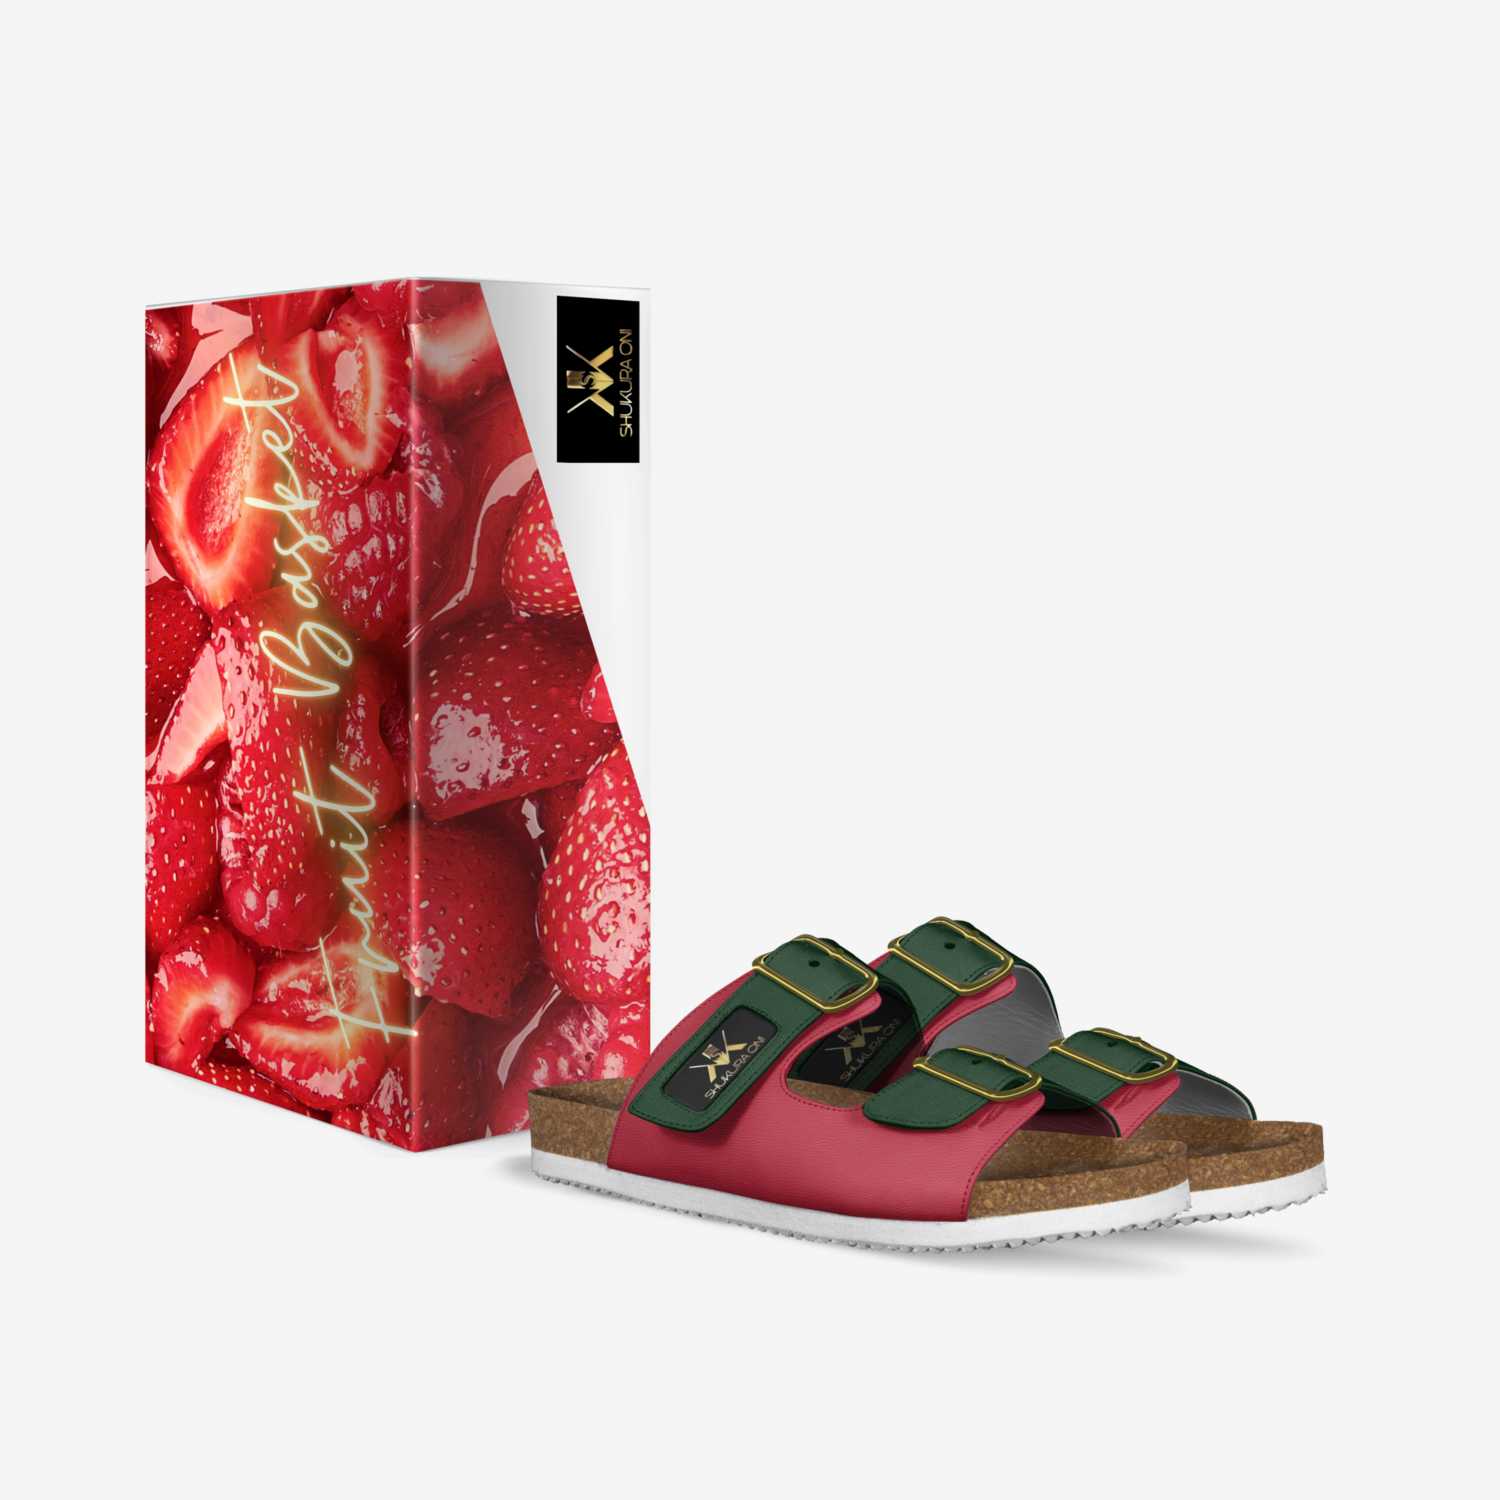 Strawberries custom made in Italy shoes by Shukura Oni | Box view